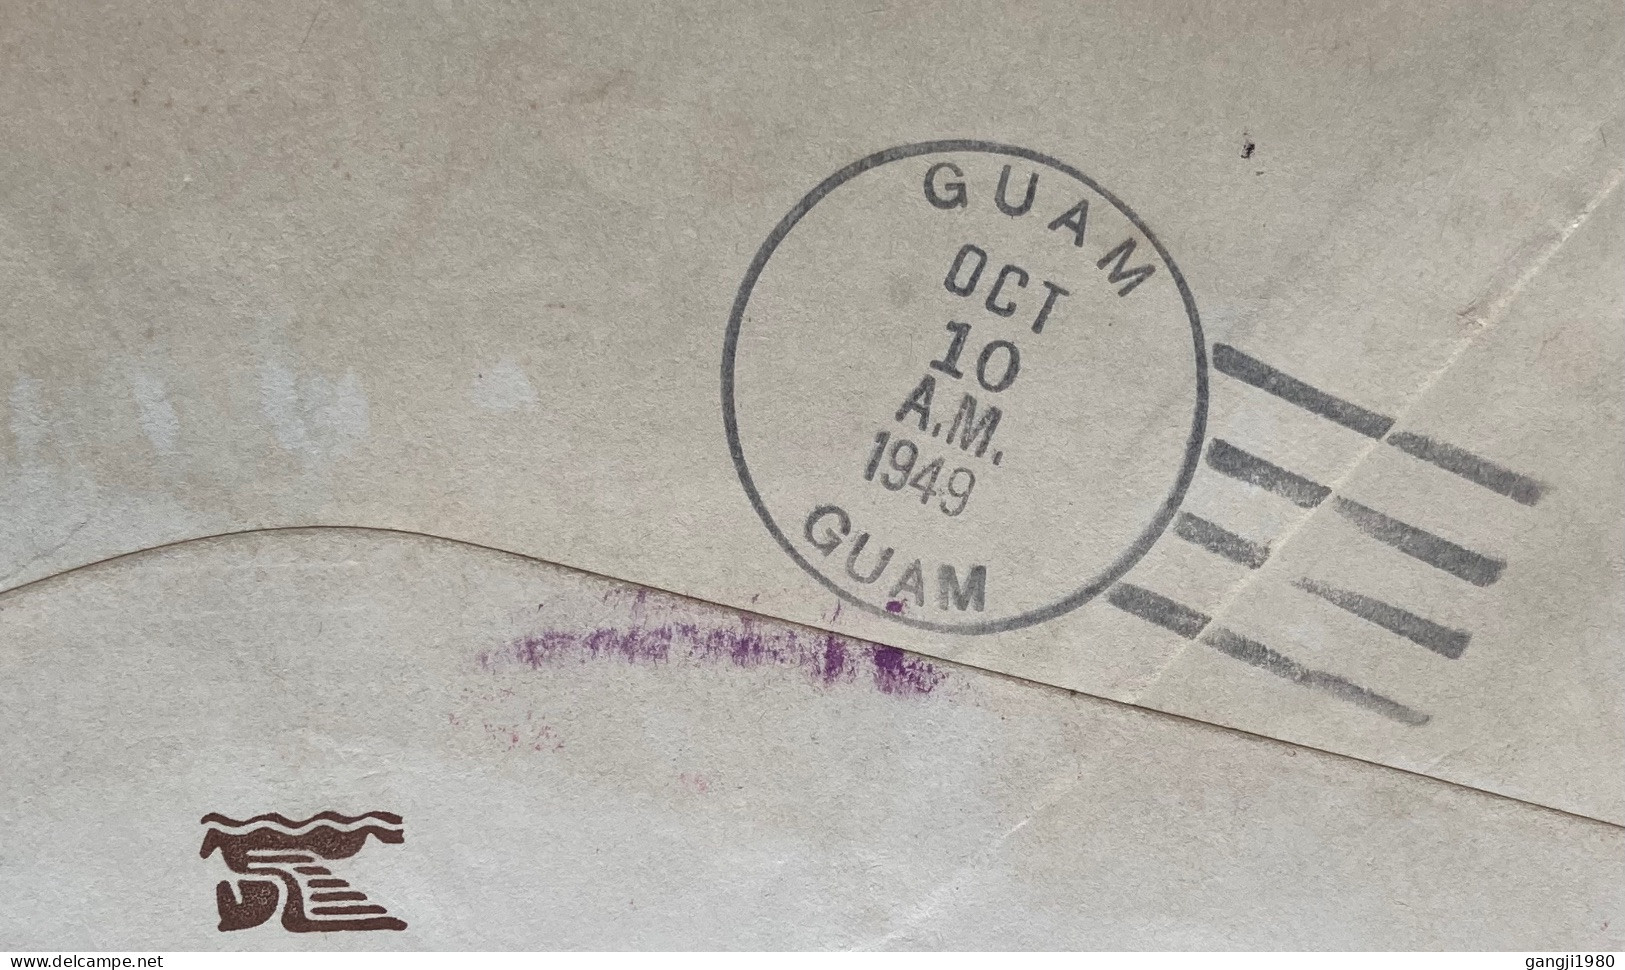 CUBA -GUAM 1949, COVER USED TO  USA VIA GUAM, FORWARED, JOURNAL READER DIGEST, METER MACHINE, BUY CUBAN SUGAR, HAVANA CI - Covers & Documents